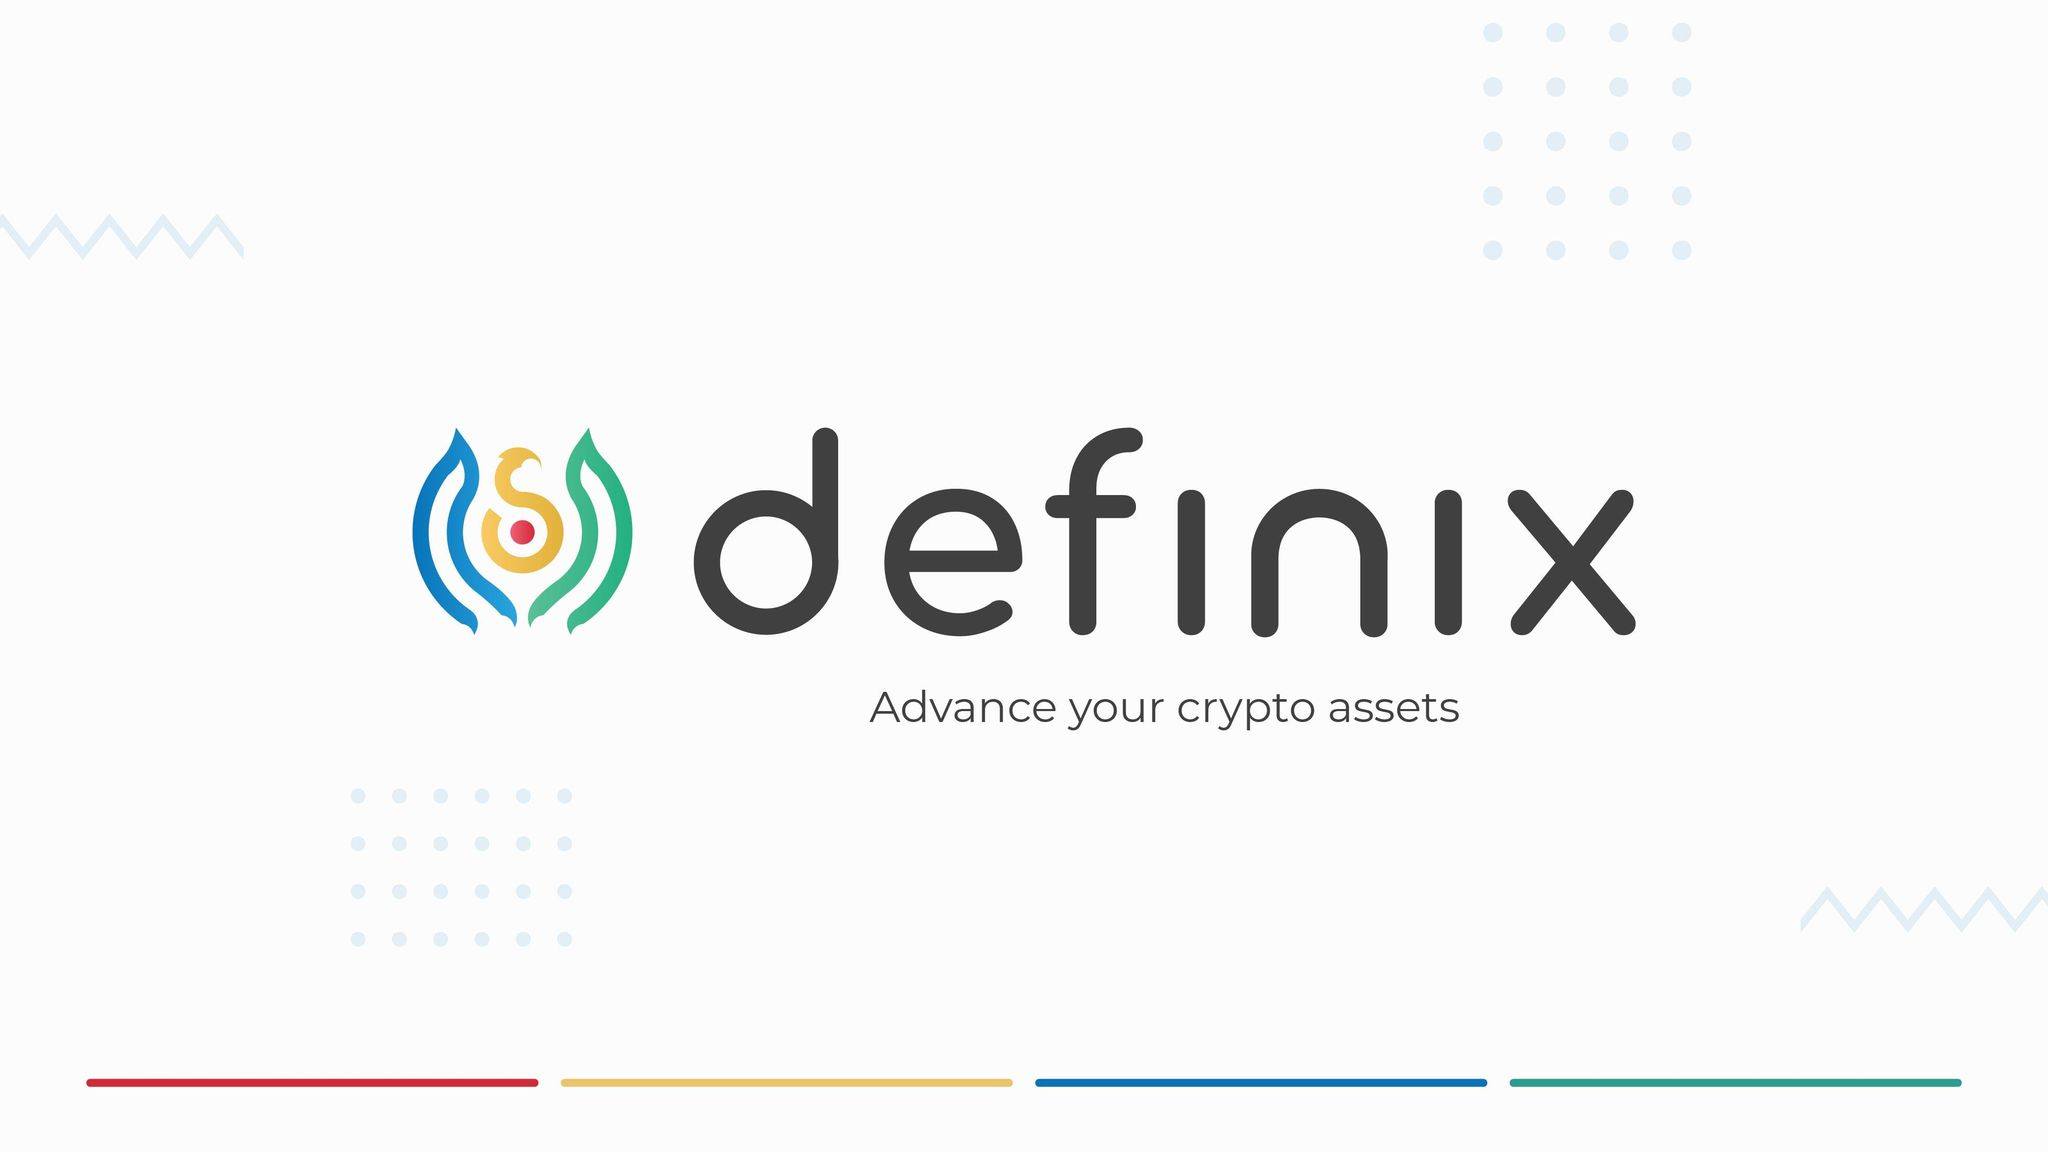 SIX Network เปิดตัวเว็บไซต์ “Definix” เพื่อเตรียมออกแพลตฟอร์ม DeFi เร็ว ๆ นี้